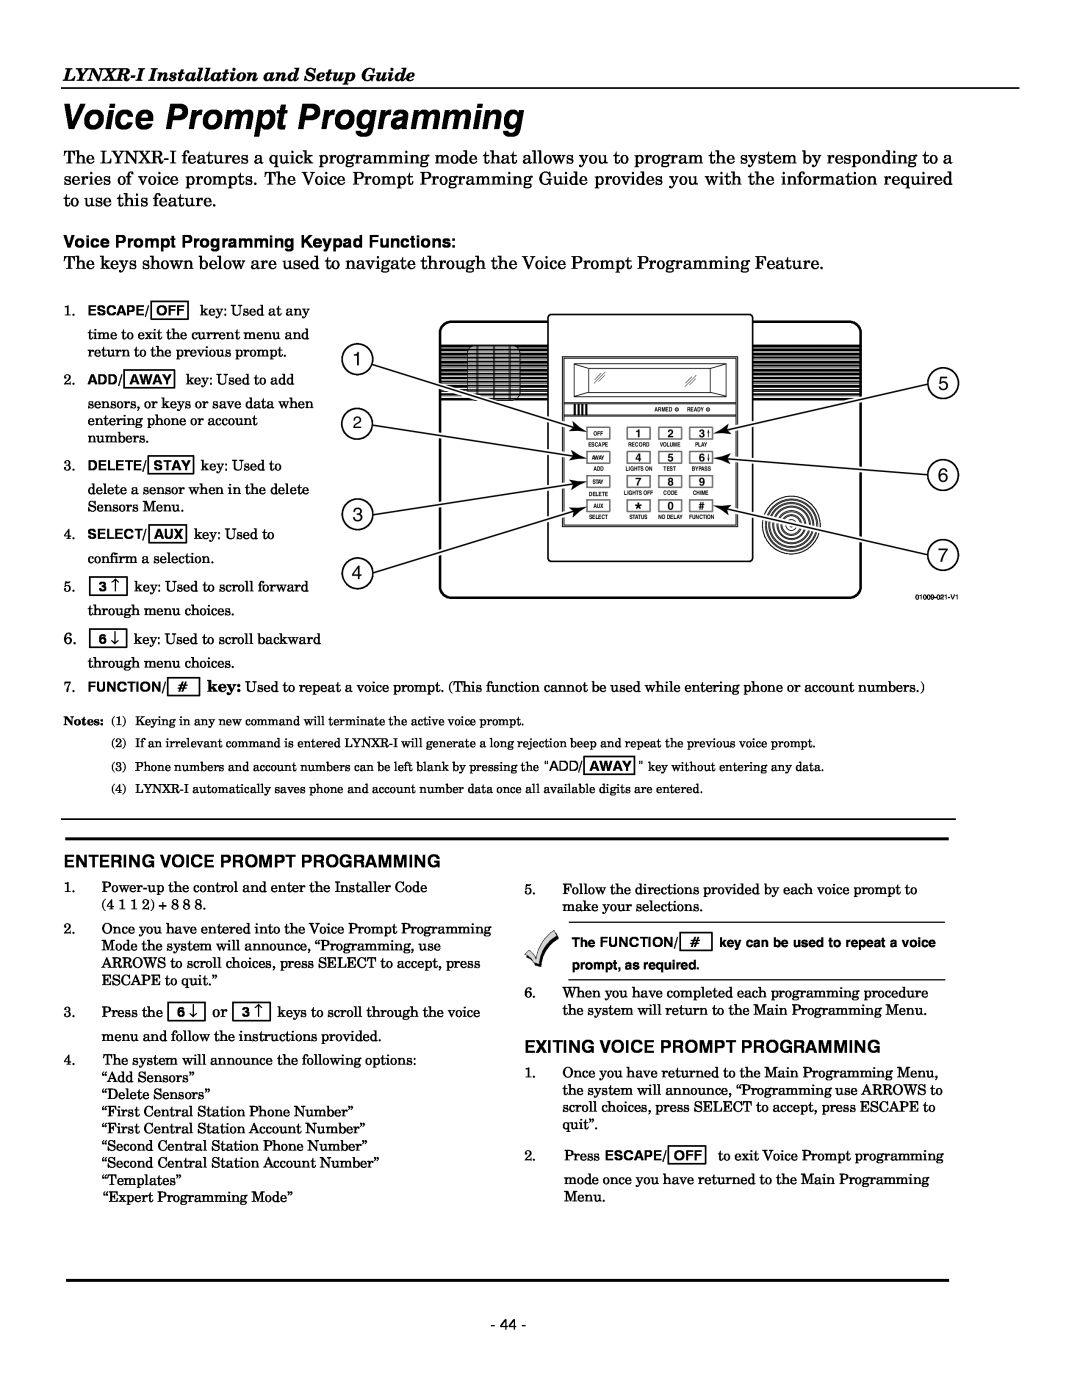 Honeywell K14114 3/06 Rev.B setup guide Voice Prompt Programming Keypad Functions, Entering Voice Prompt Programming 